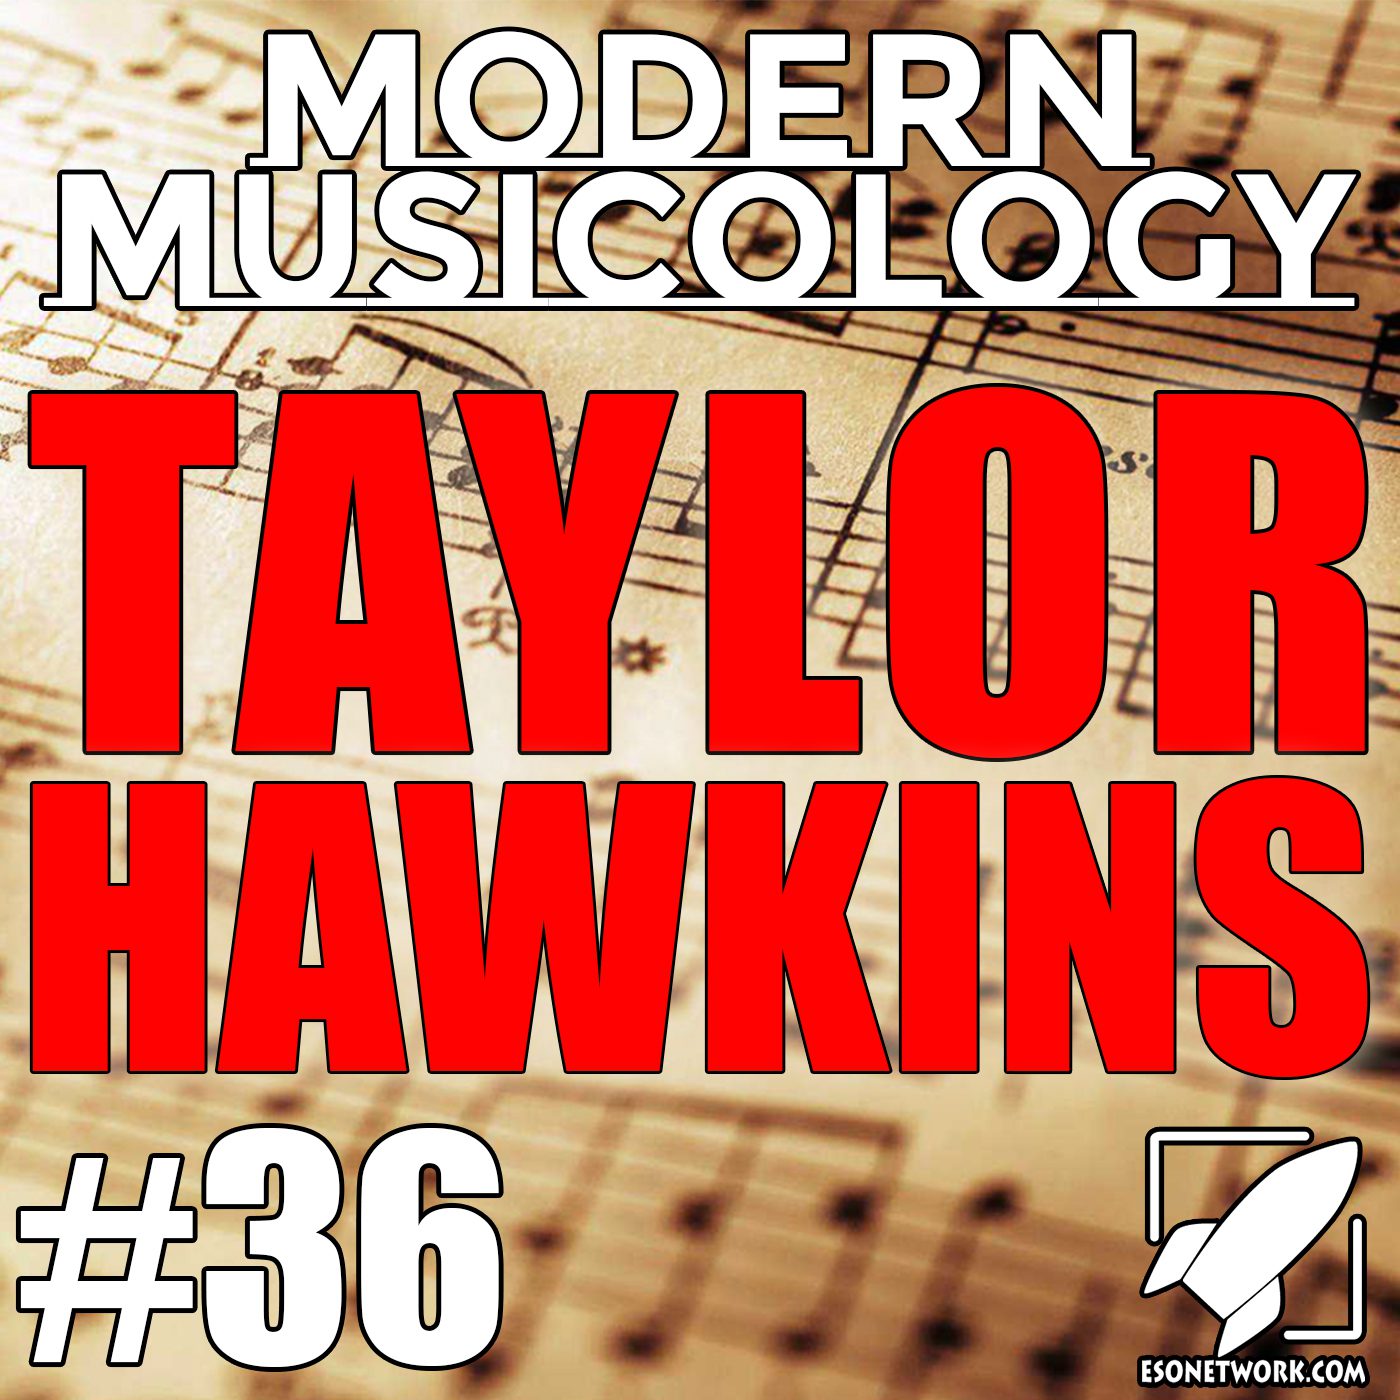 Modern Musicology 36 Taylor Hawkins Tribute Concert